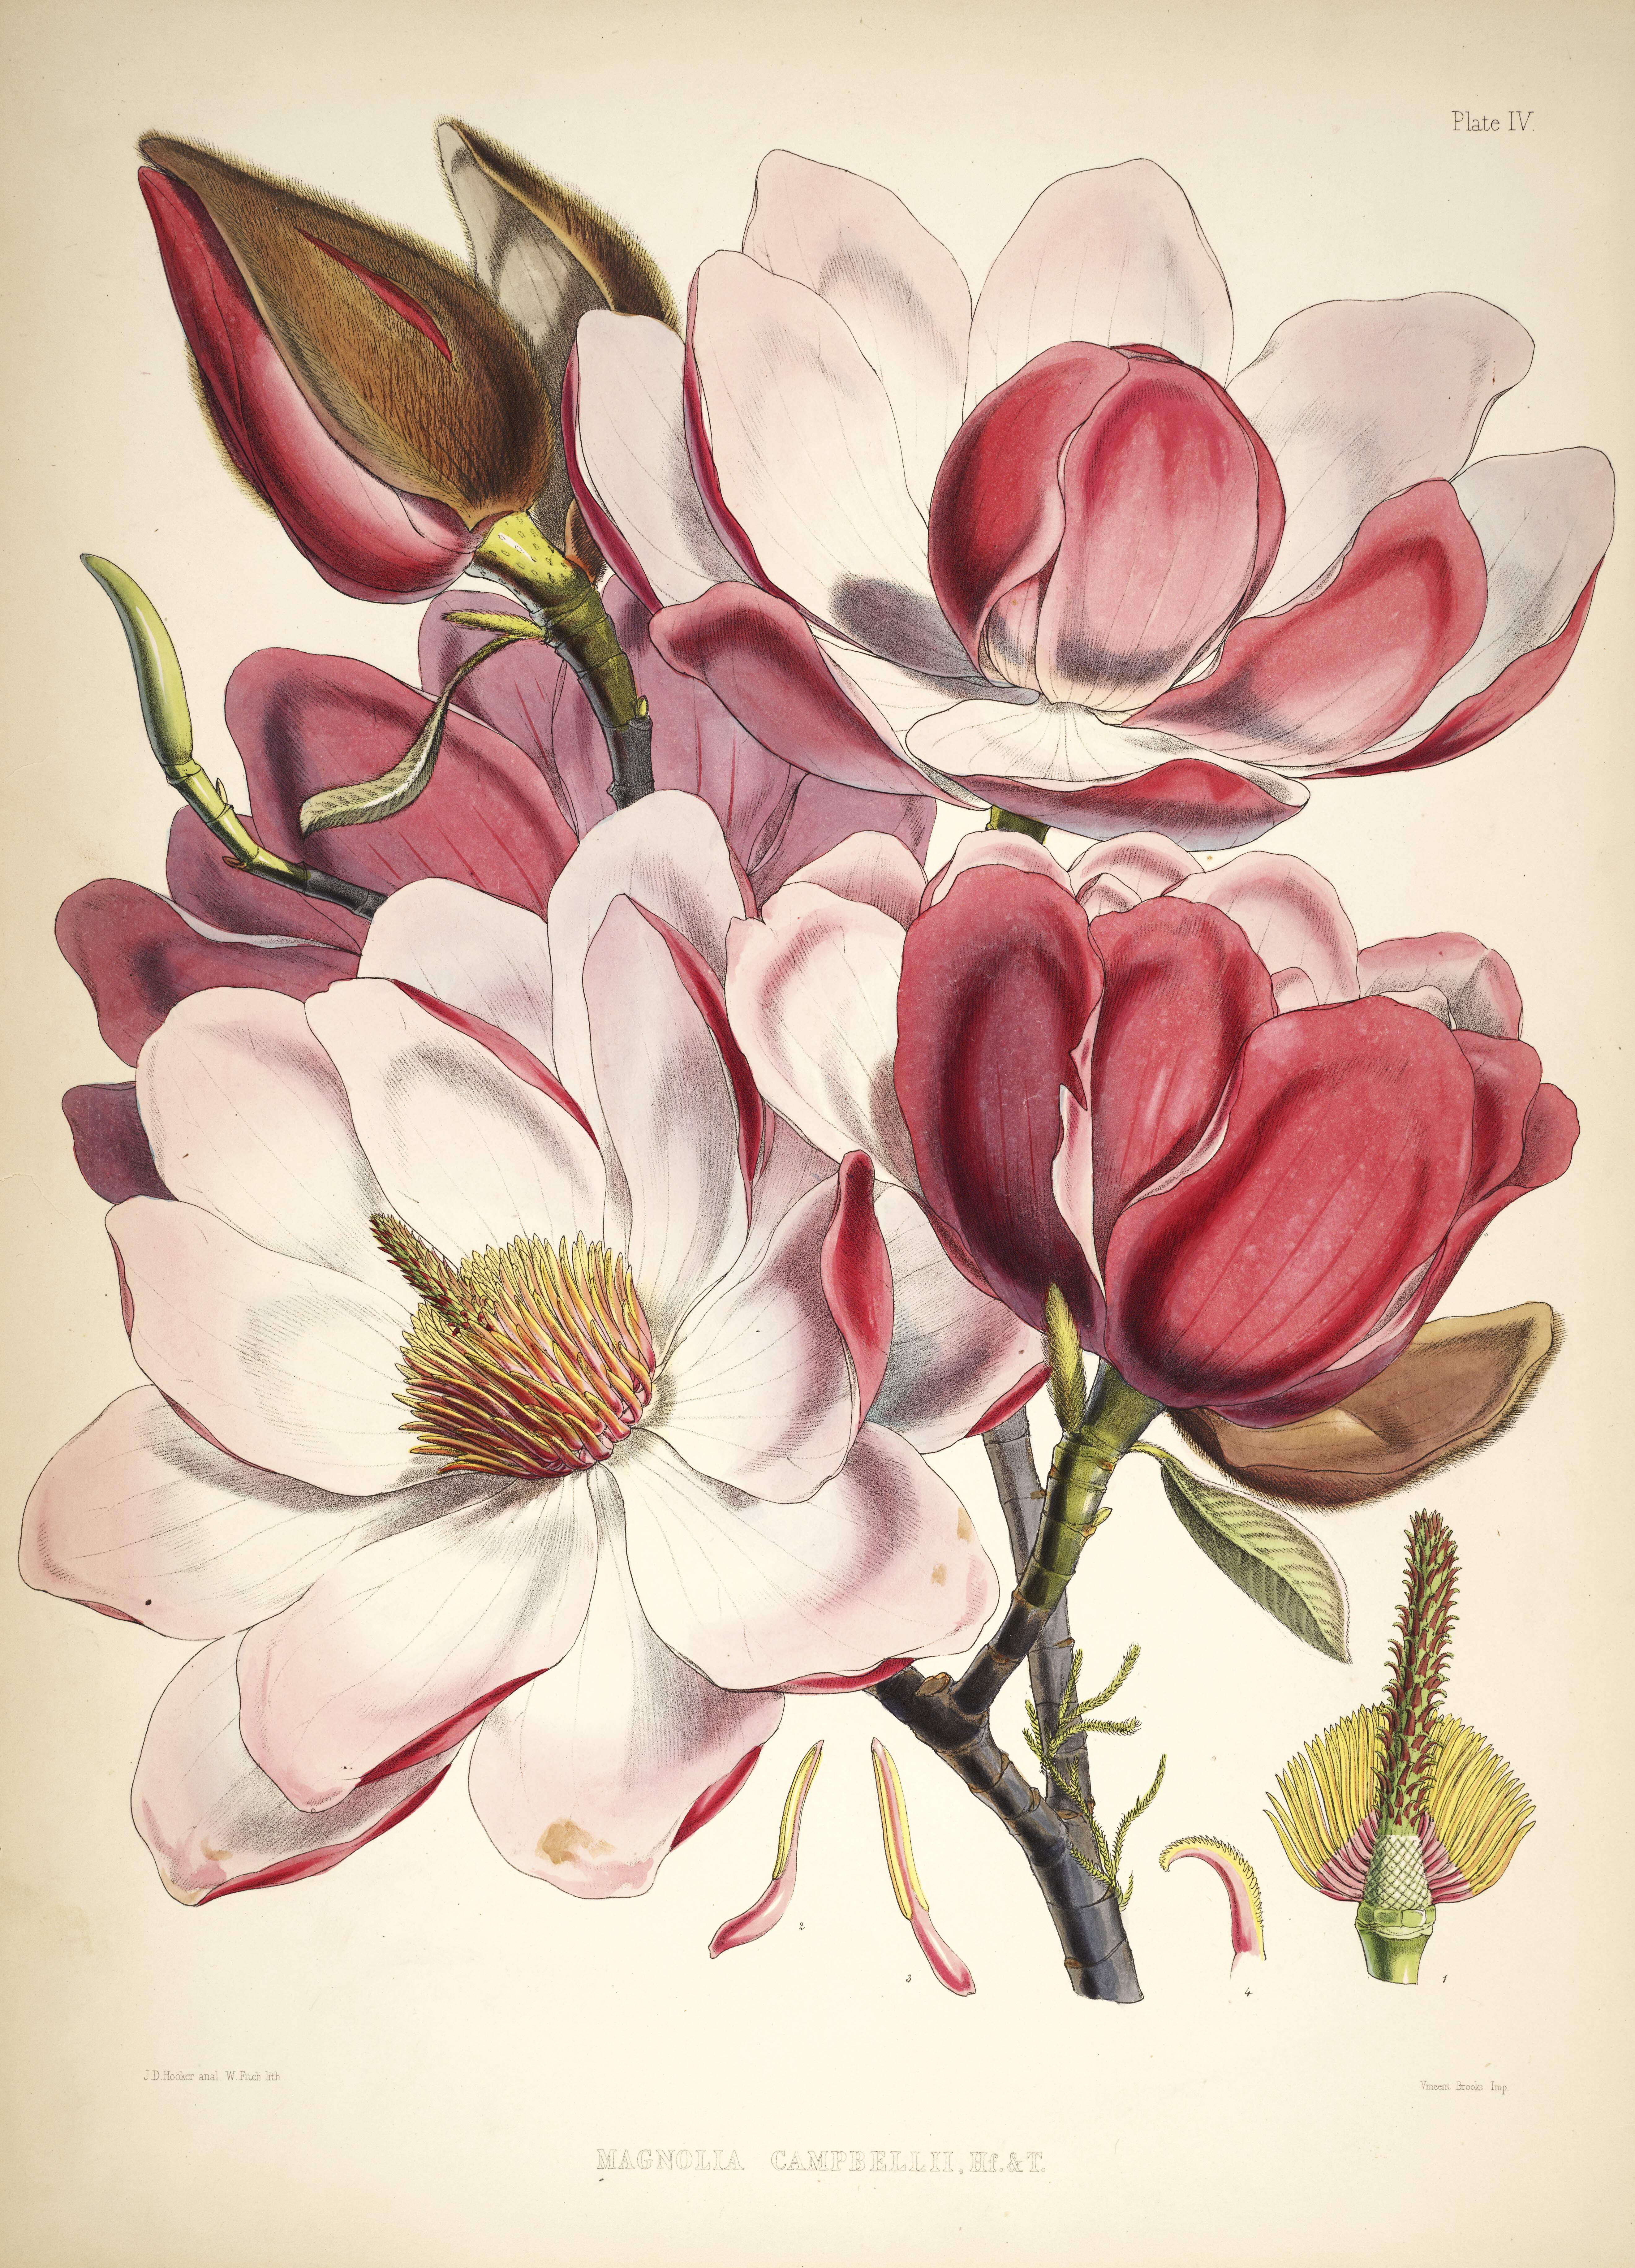 Magnolia campbellii – Old Book Illustrations